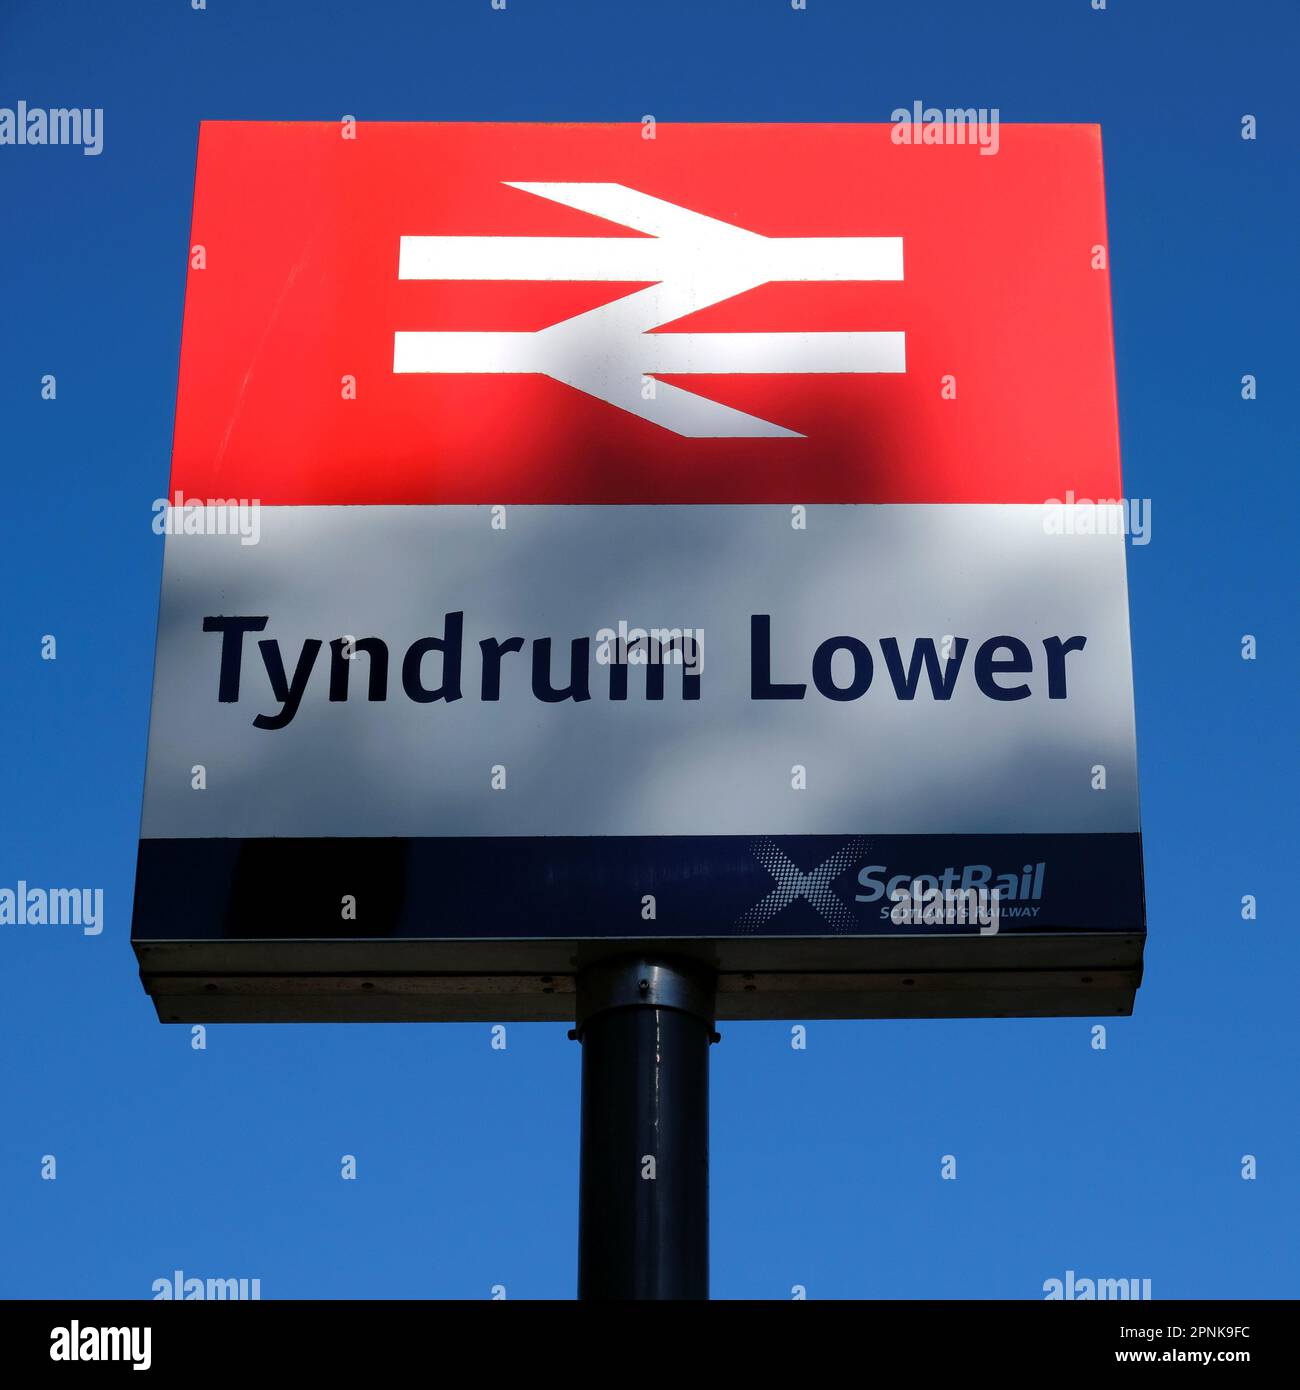 Tyndrum Lower railway station sign, Tyndrum Scotland Stock Photo